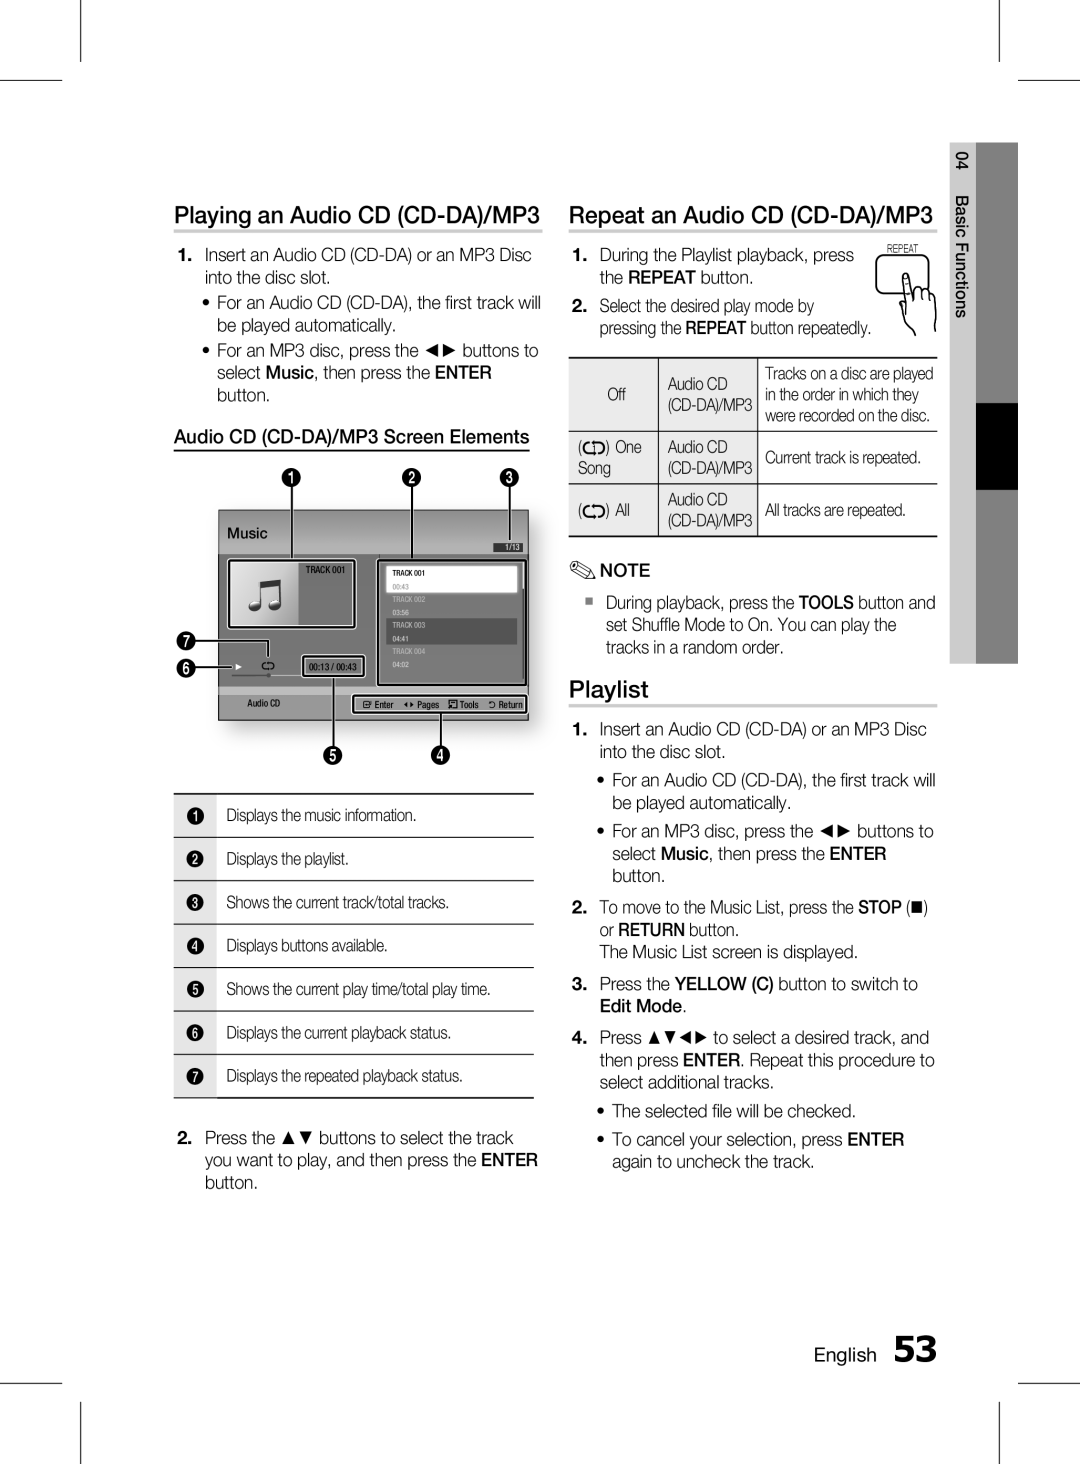 Samsung HT-D6750WK/SQ manual Playing an Audio CD CD-DA/MP3, Repeat an Audio CD CD-DA/MP3, Playlist 